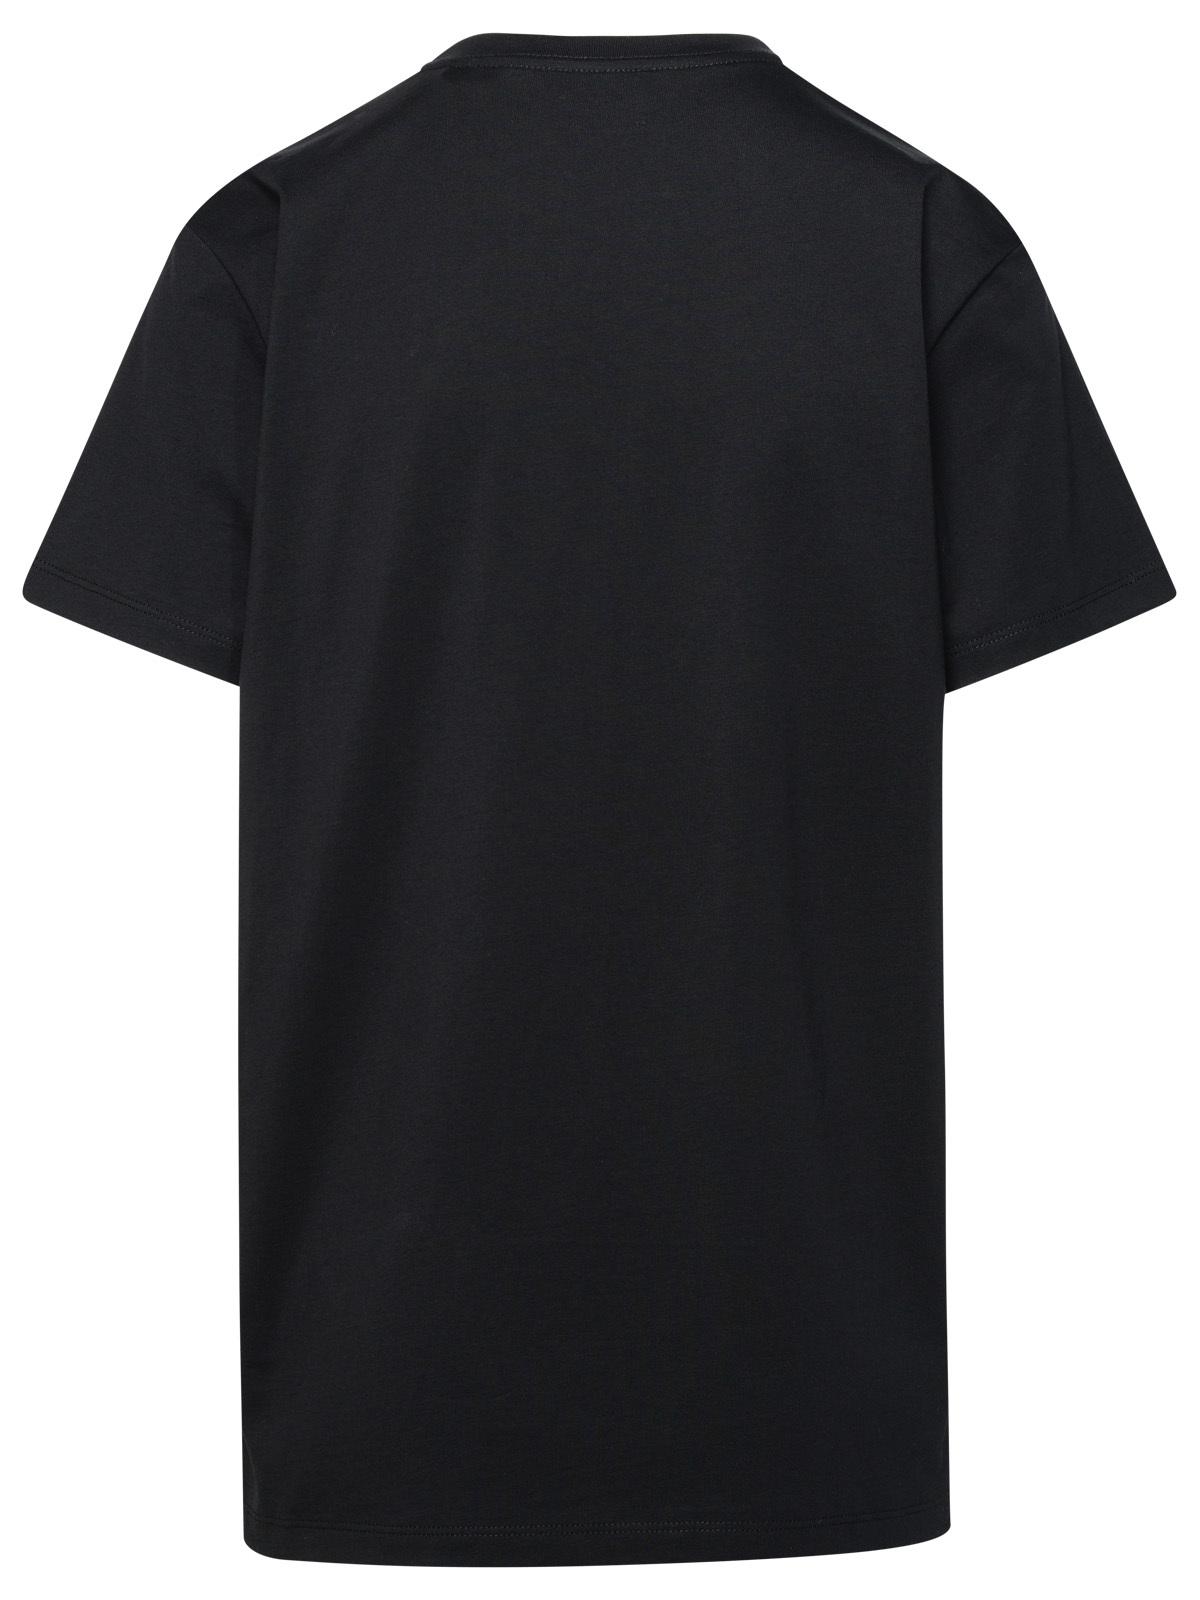 Isabel Marant 'Vidal' Black Cotton T-Shirt Woman